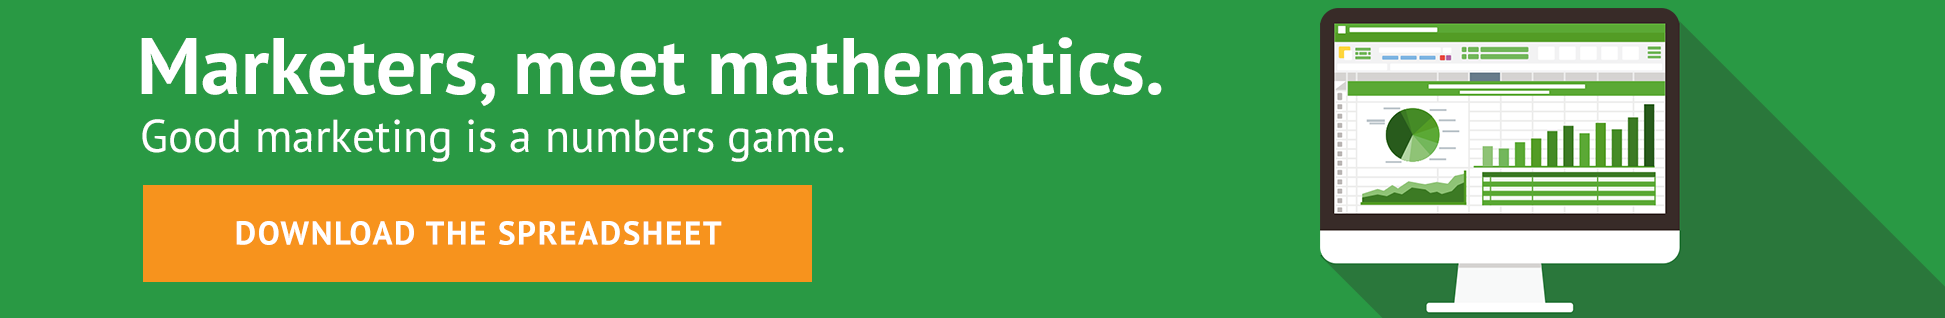 marketers meet mathematics CTA